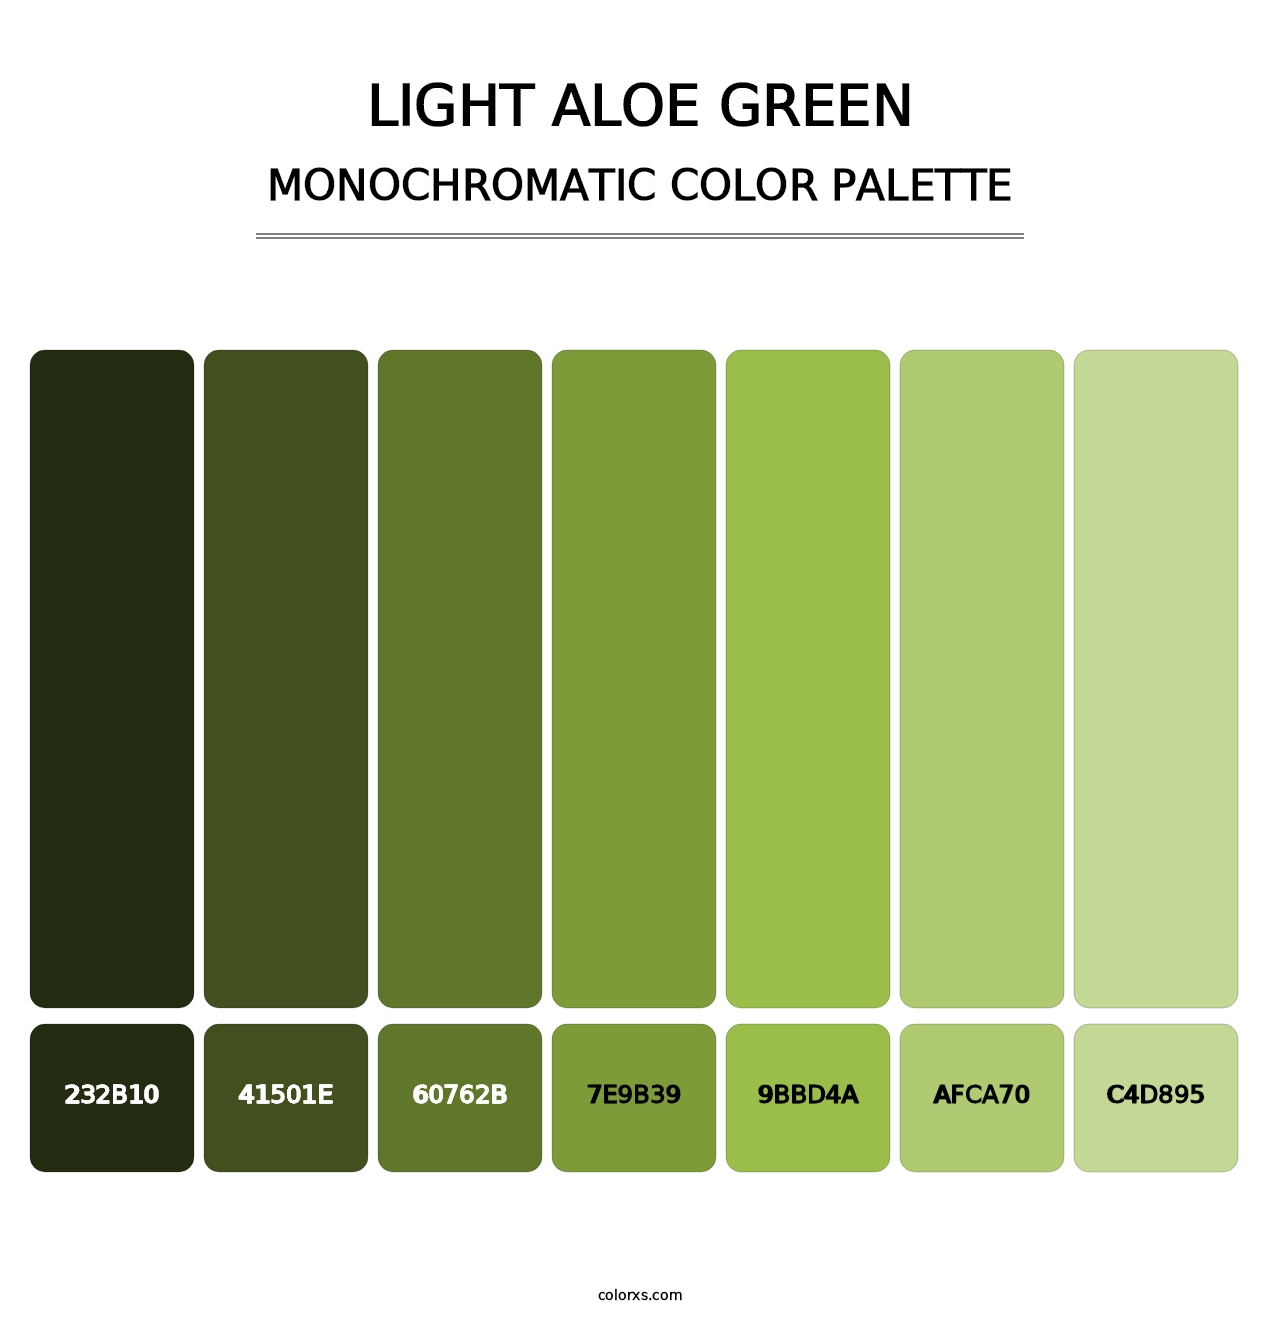 Light Aloe Green - Monochromatic Color Palette